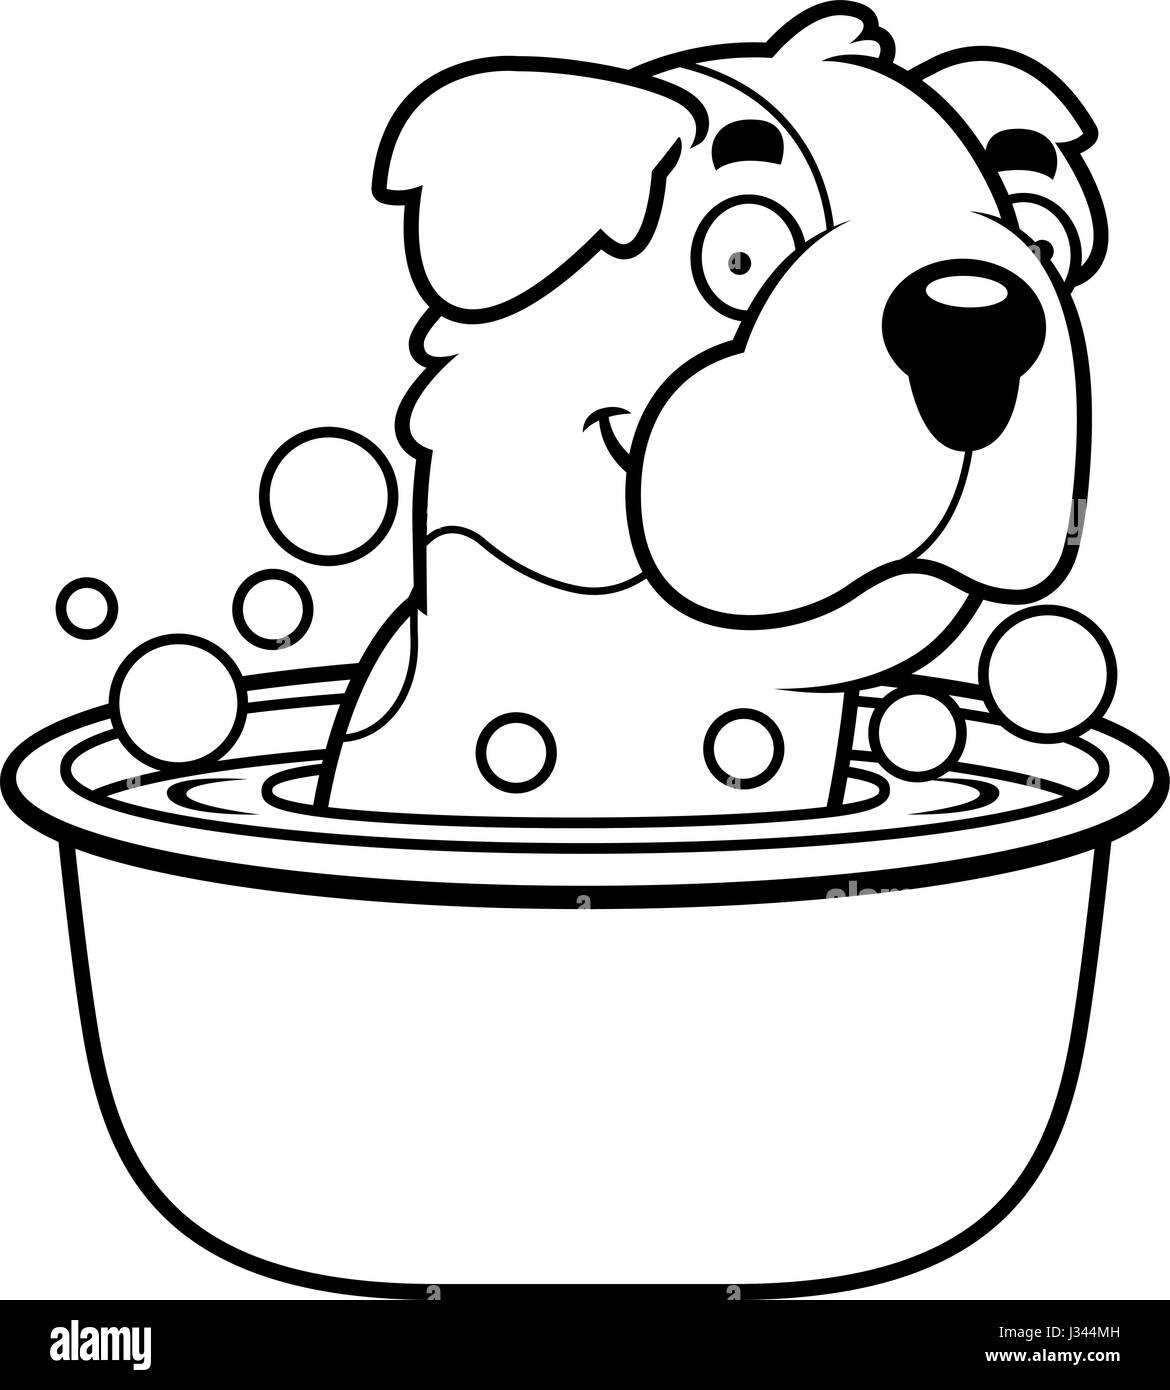 Happy st bernard dog Stock Vector Images - Alamy